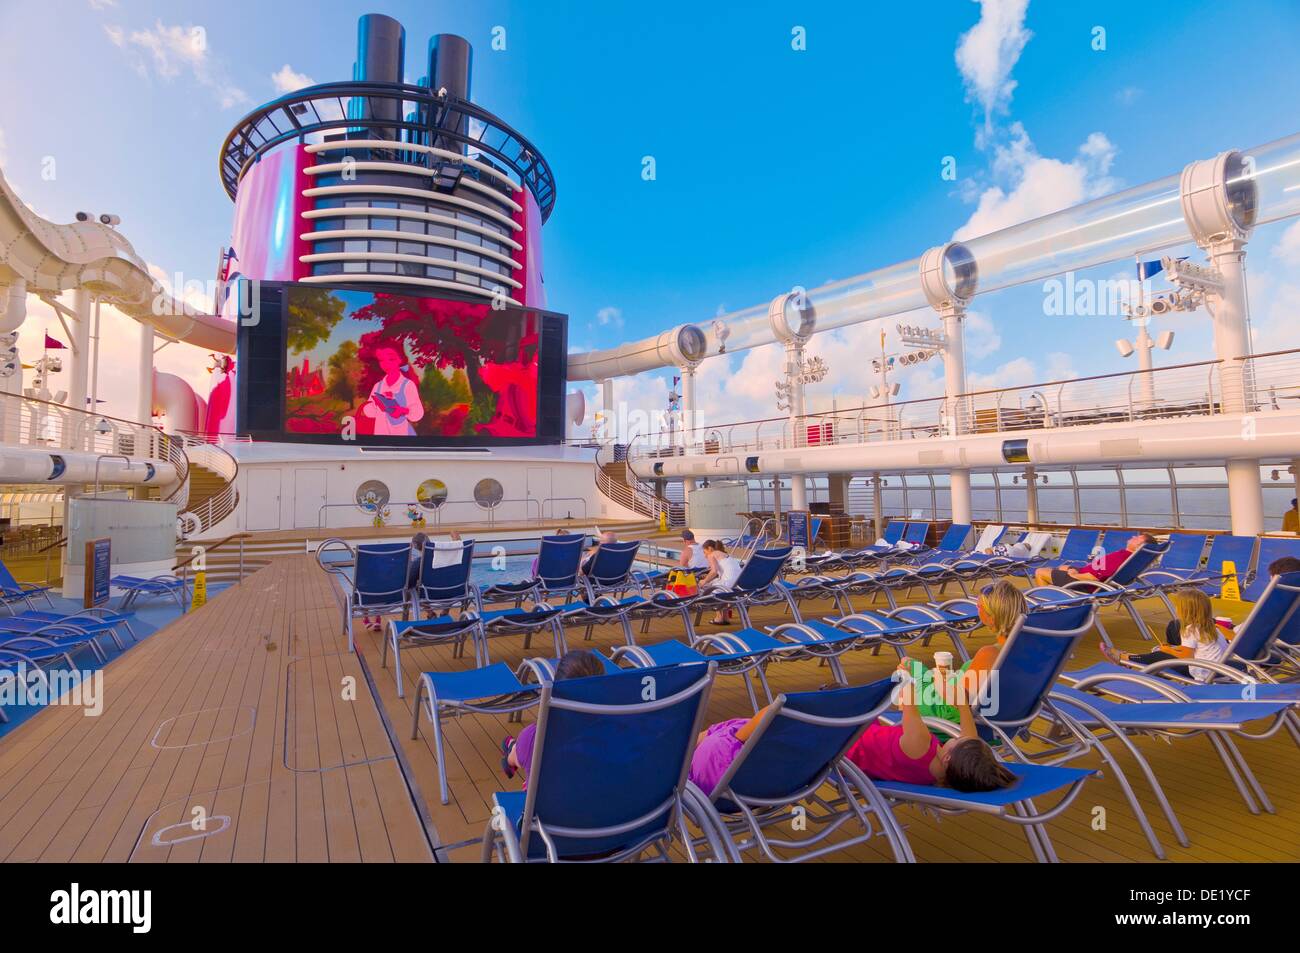 The New Disney Dream Cruise Ship Disney Cruise Line Sailing Between Florida And The Bahamas Stock Photo Alamy